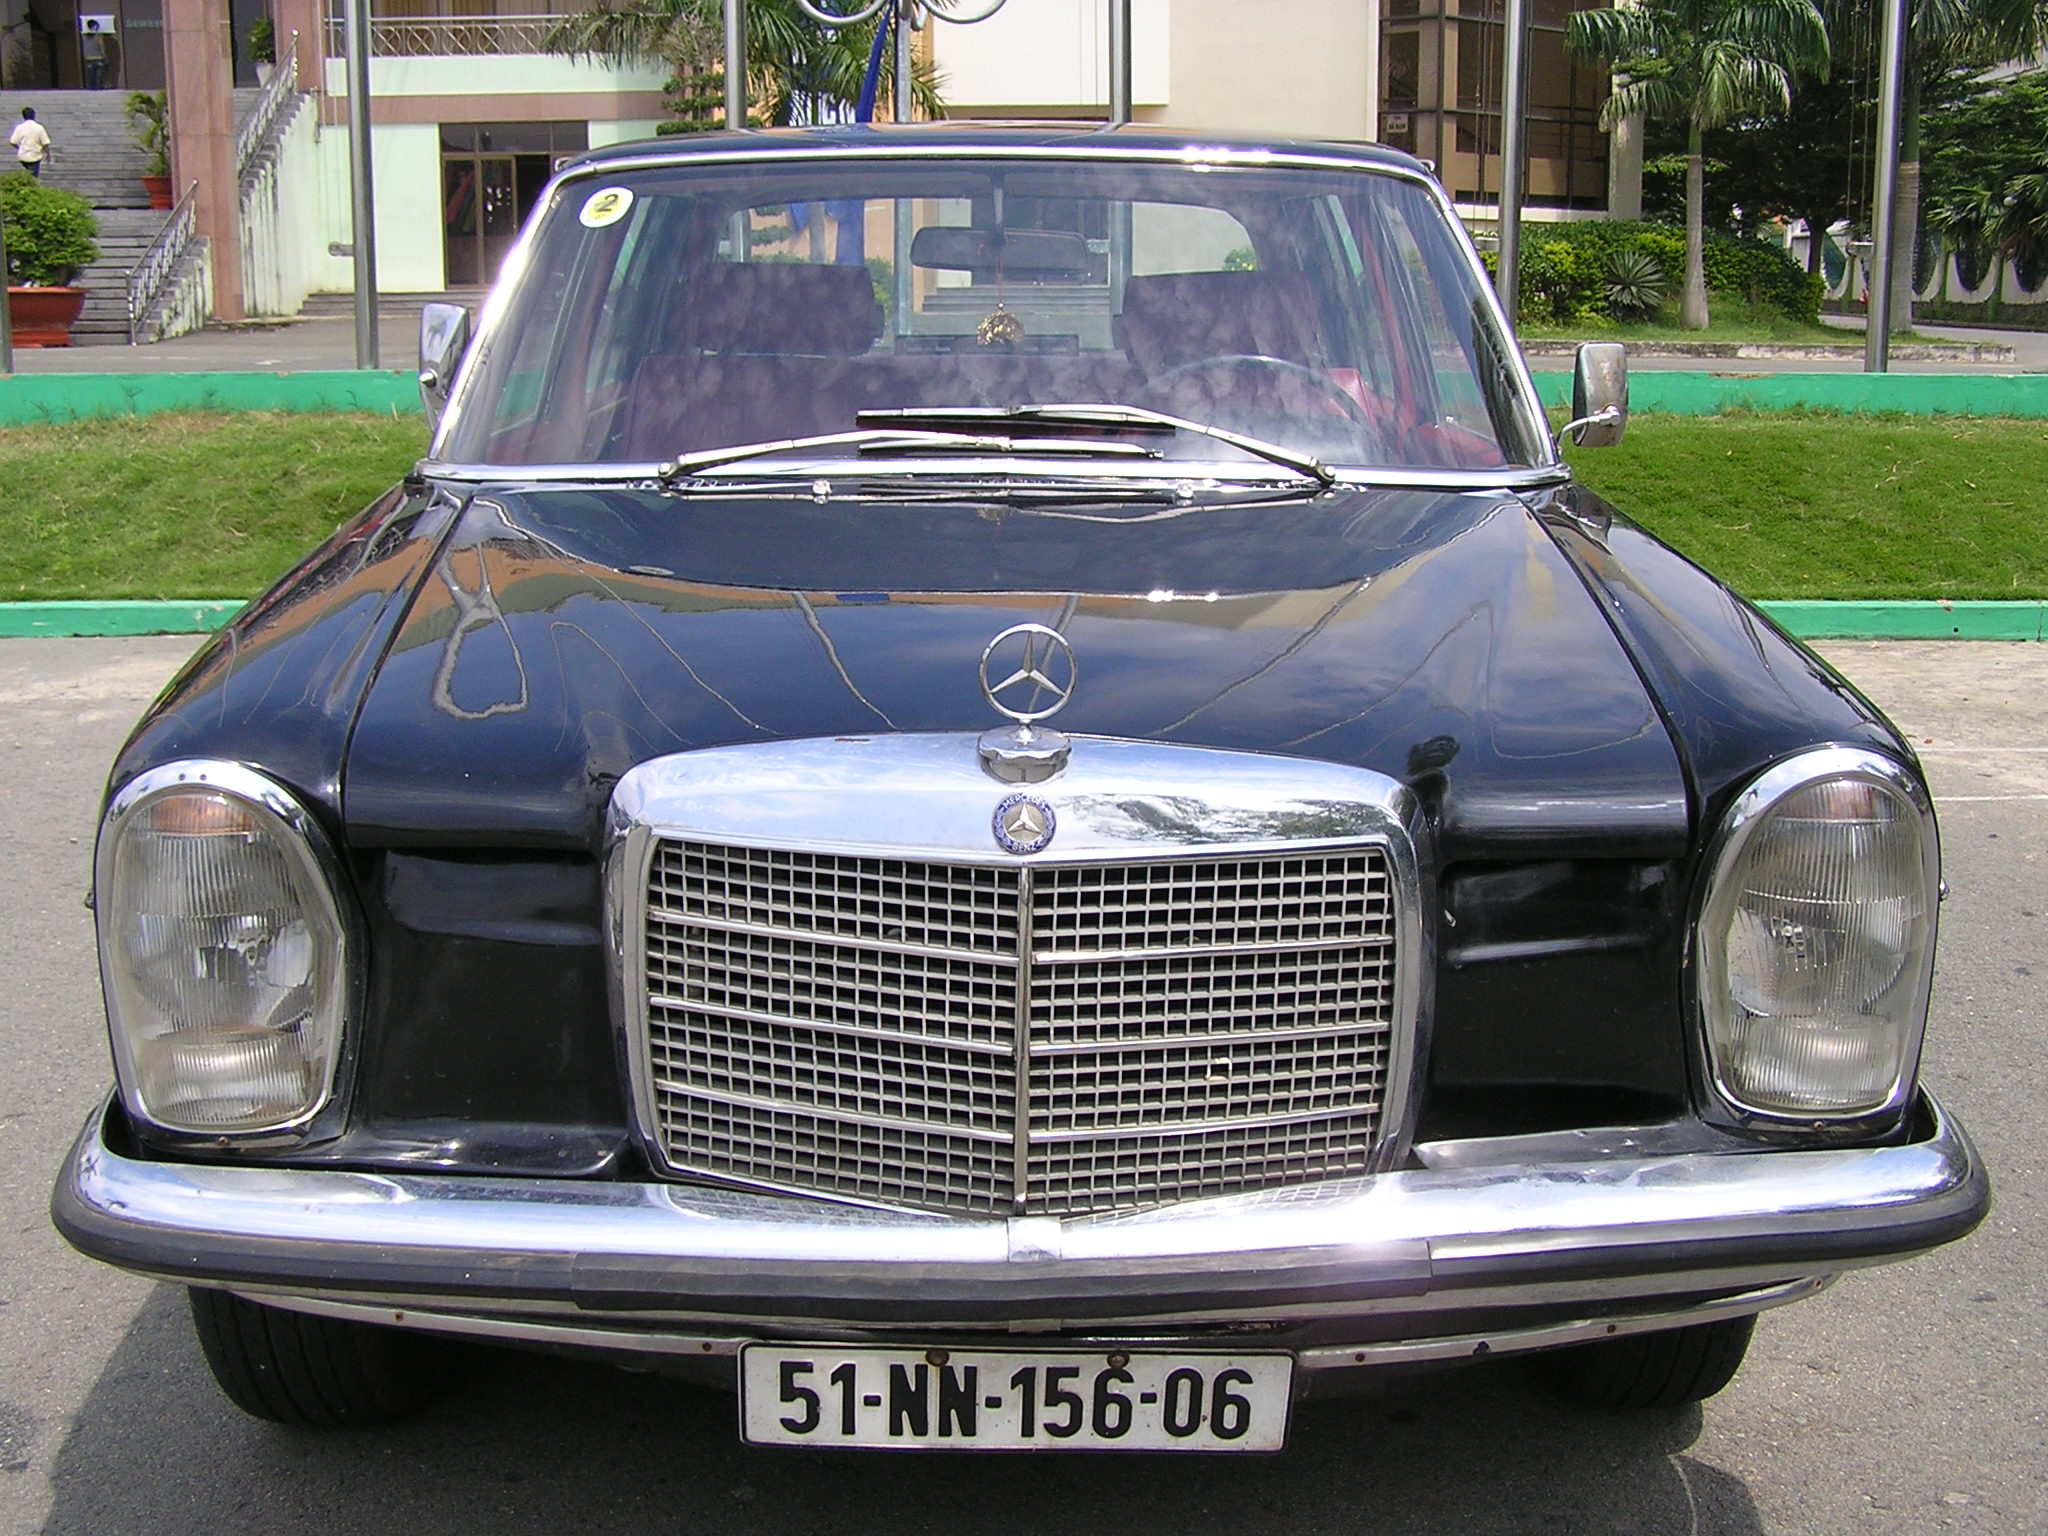 Trai-nghiem-qua-khu-ngot-ngao-tren-Mercedes-Benz-Limousine-230E-1969-anh-4